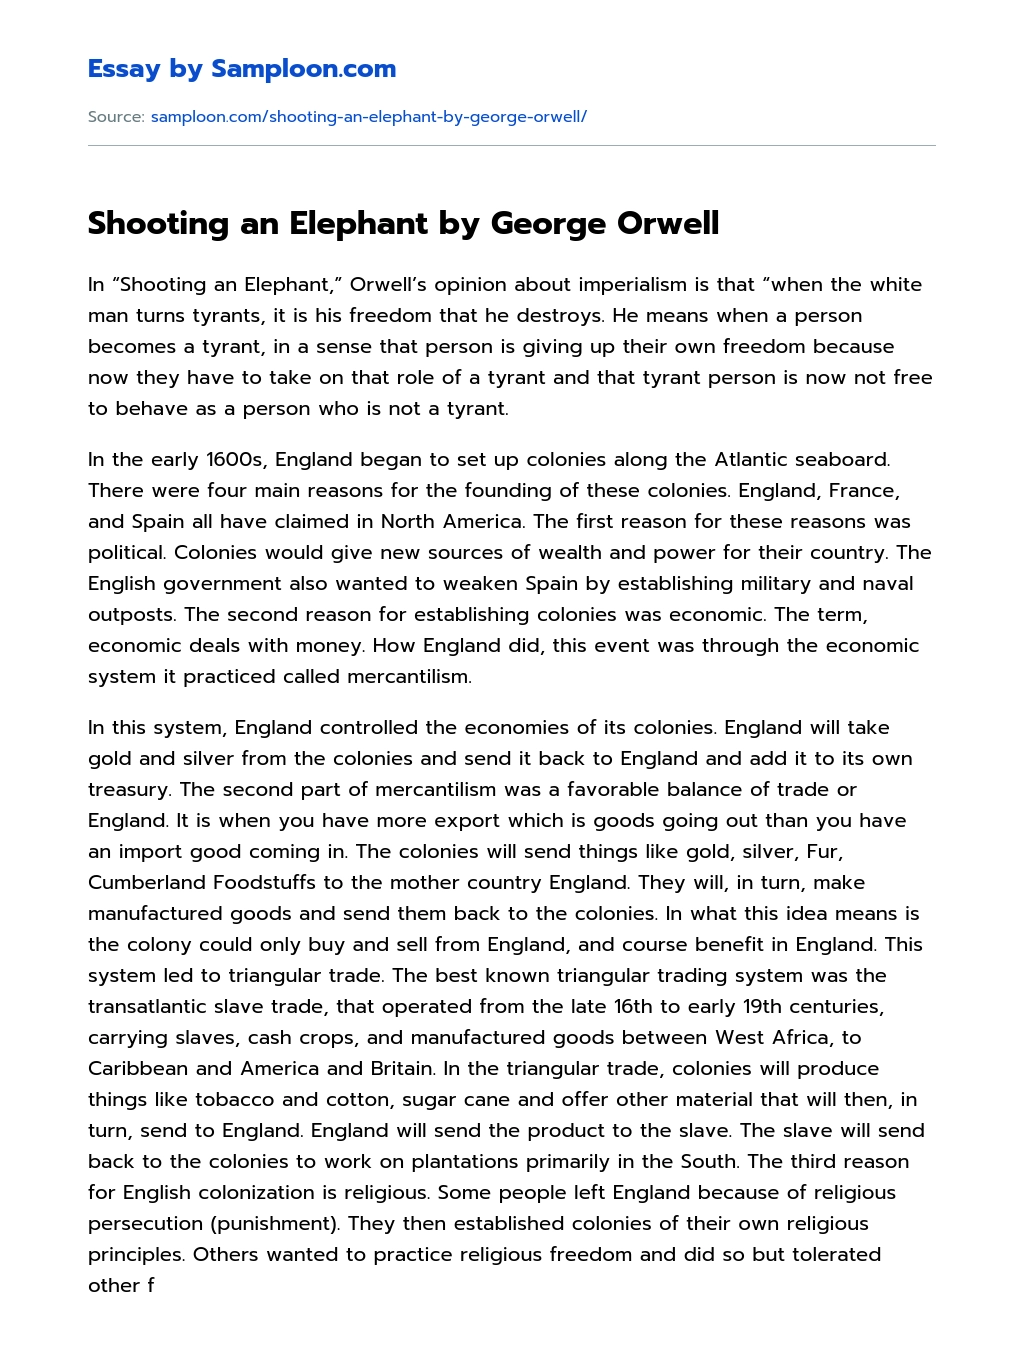 Shooting an Elephant by George Orwell essay